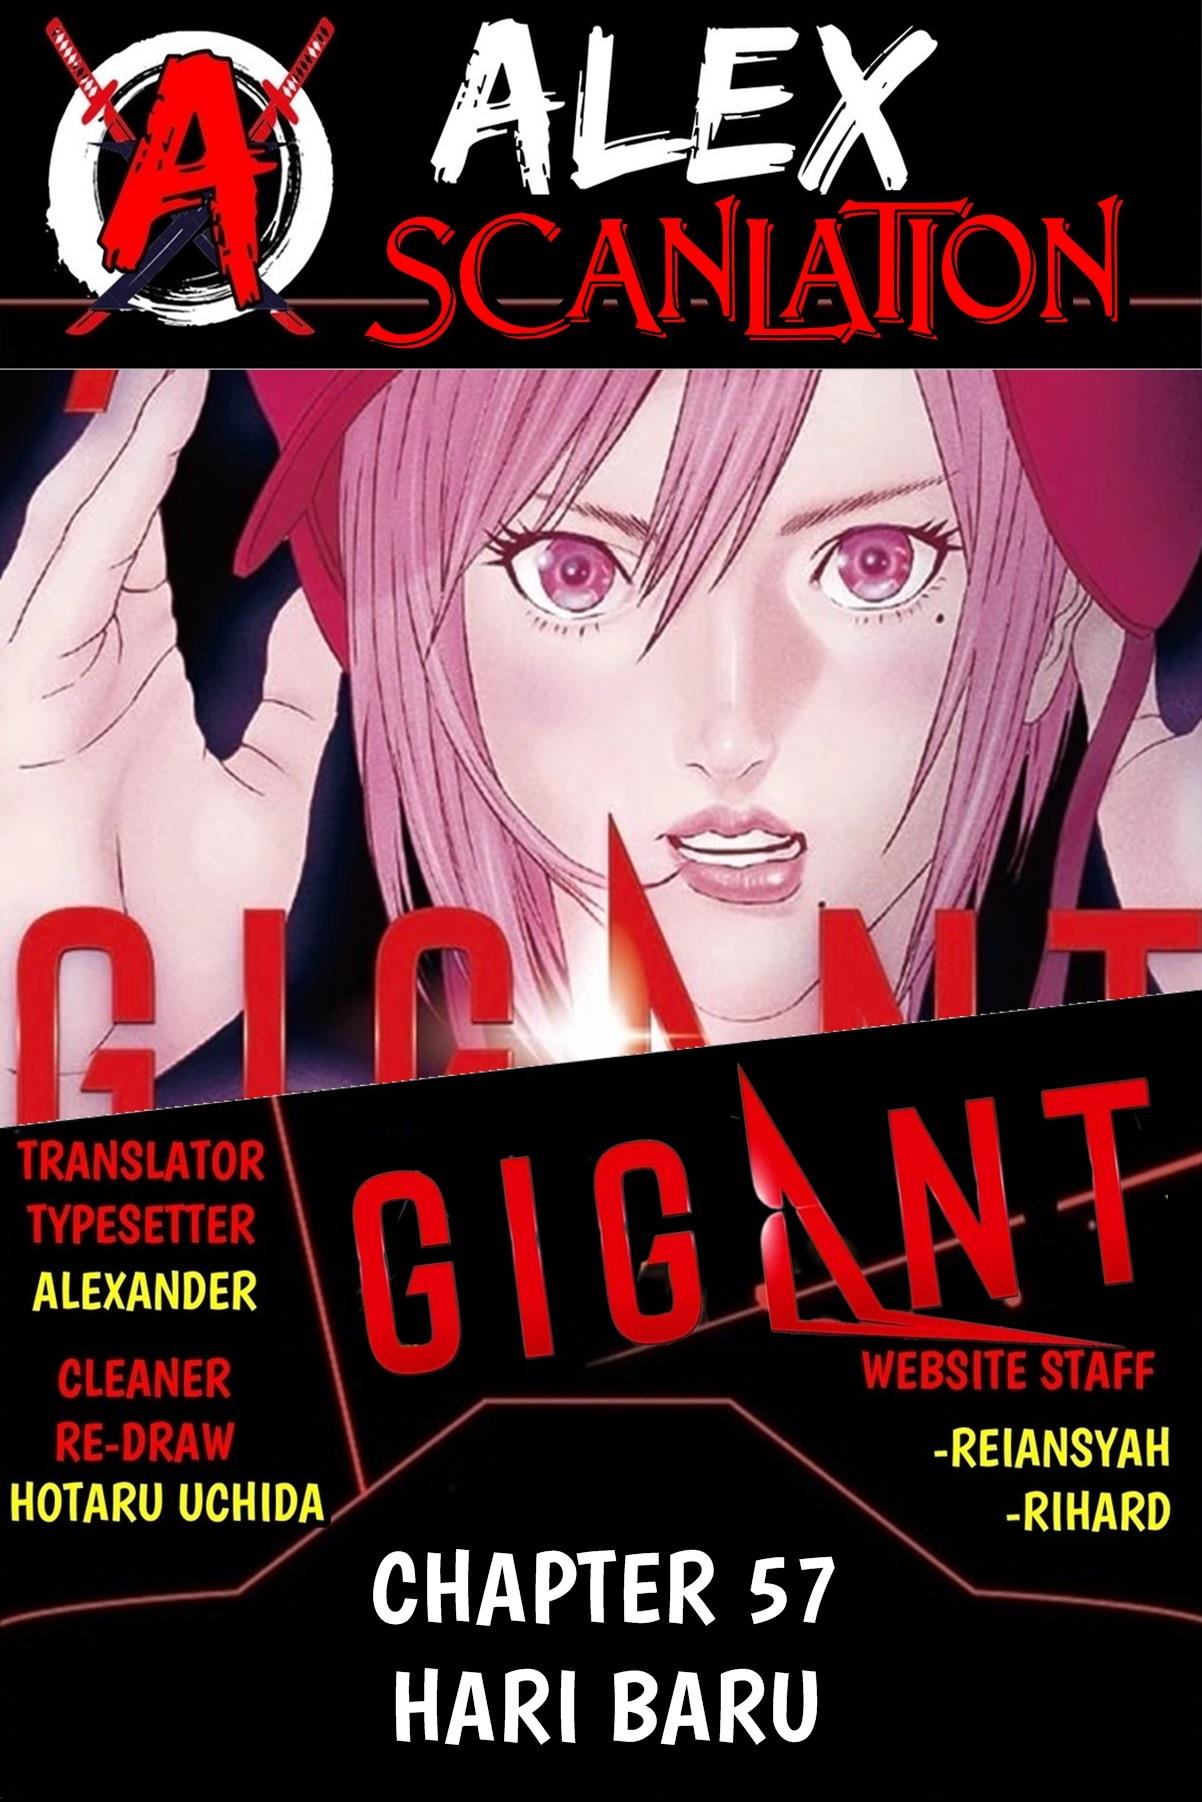 GIGANT Chapter 57